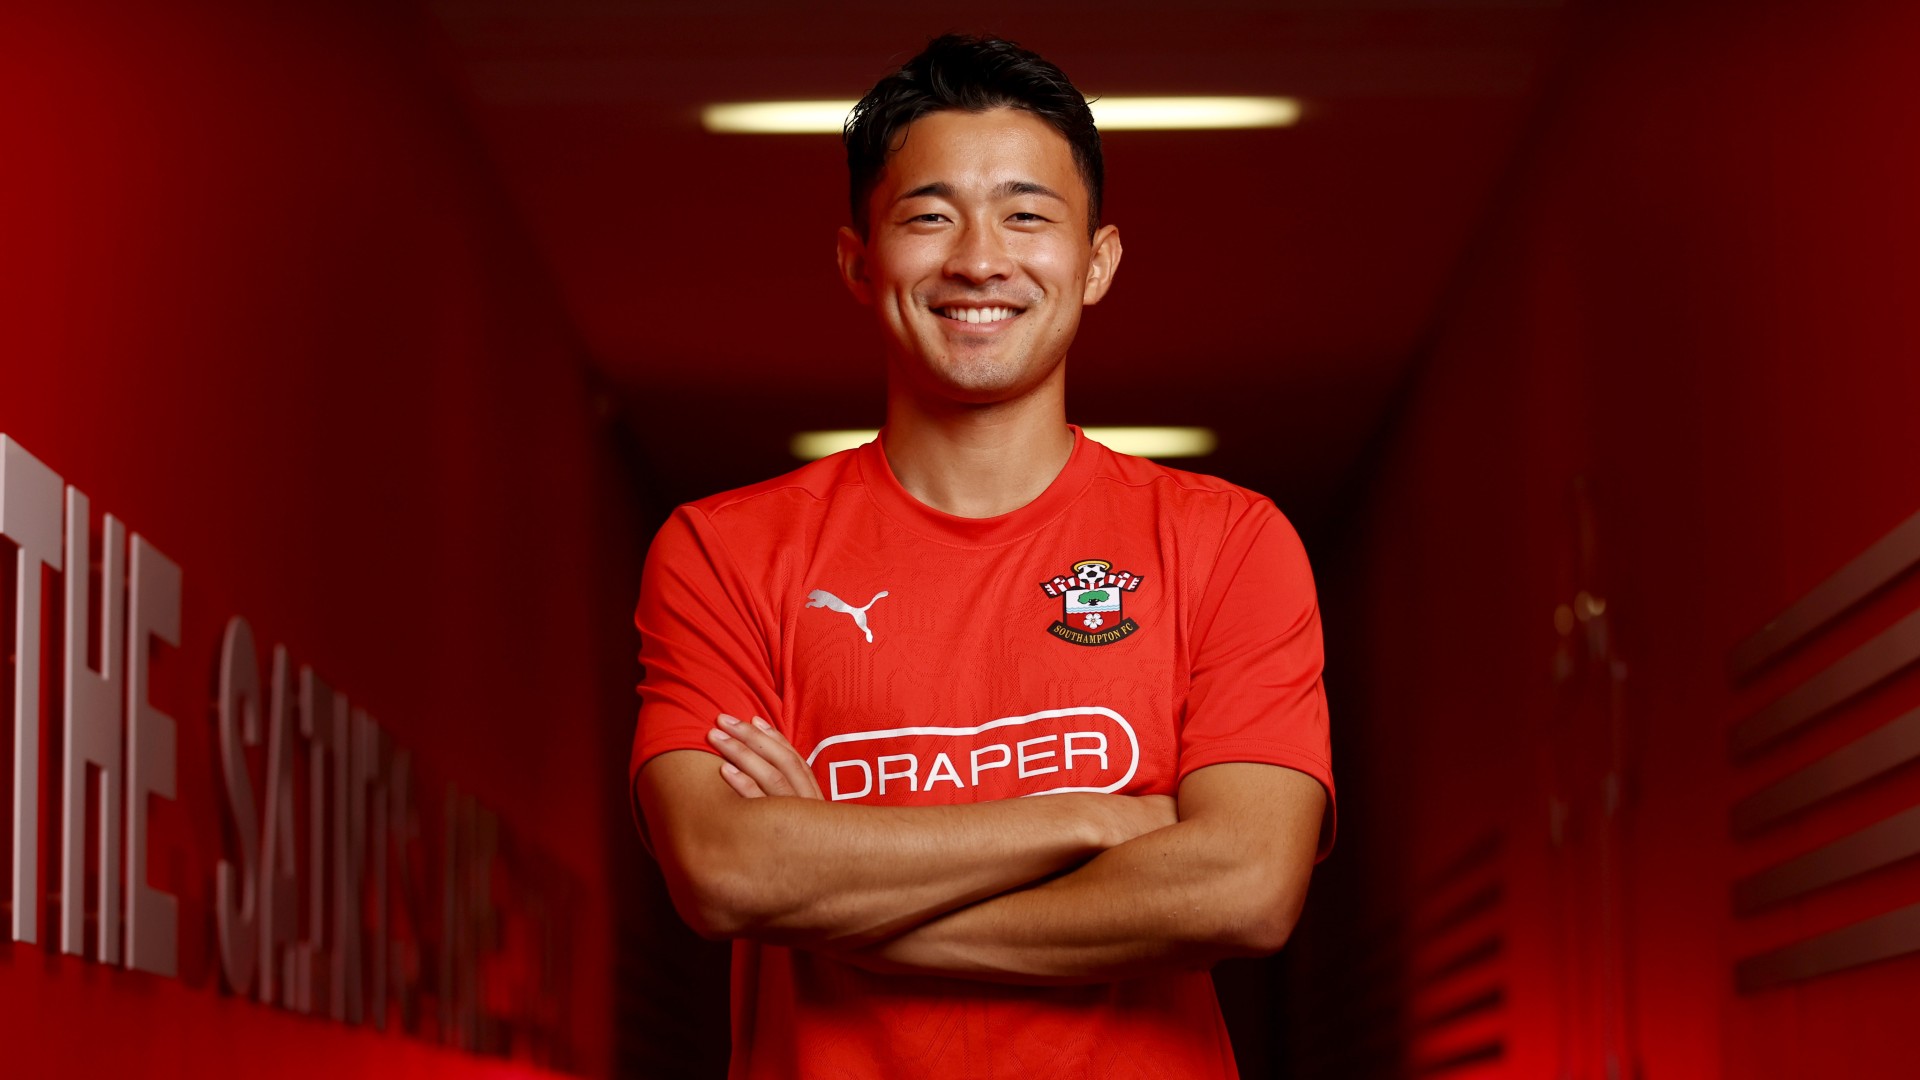 Sugawara signs for Southampton